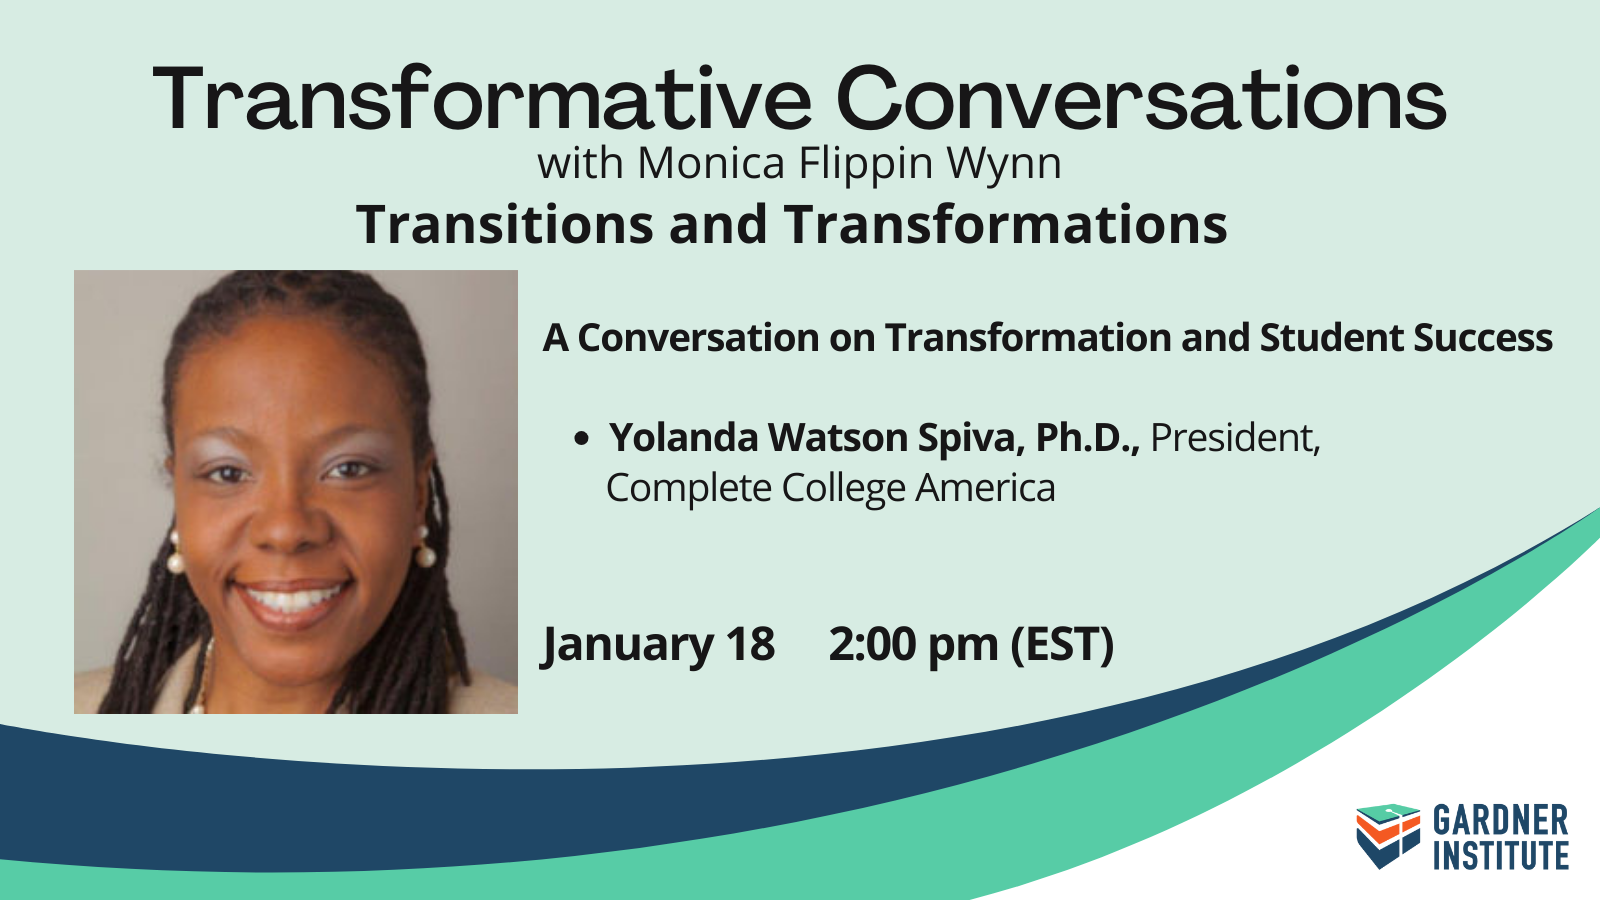 Transformative Conversations A Conversation on Transformation and Student Success Yolanda Watson Spiva, Ph.D., President, Complete College America. January 18, 2:00 pm (EST)